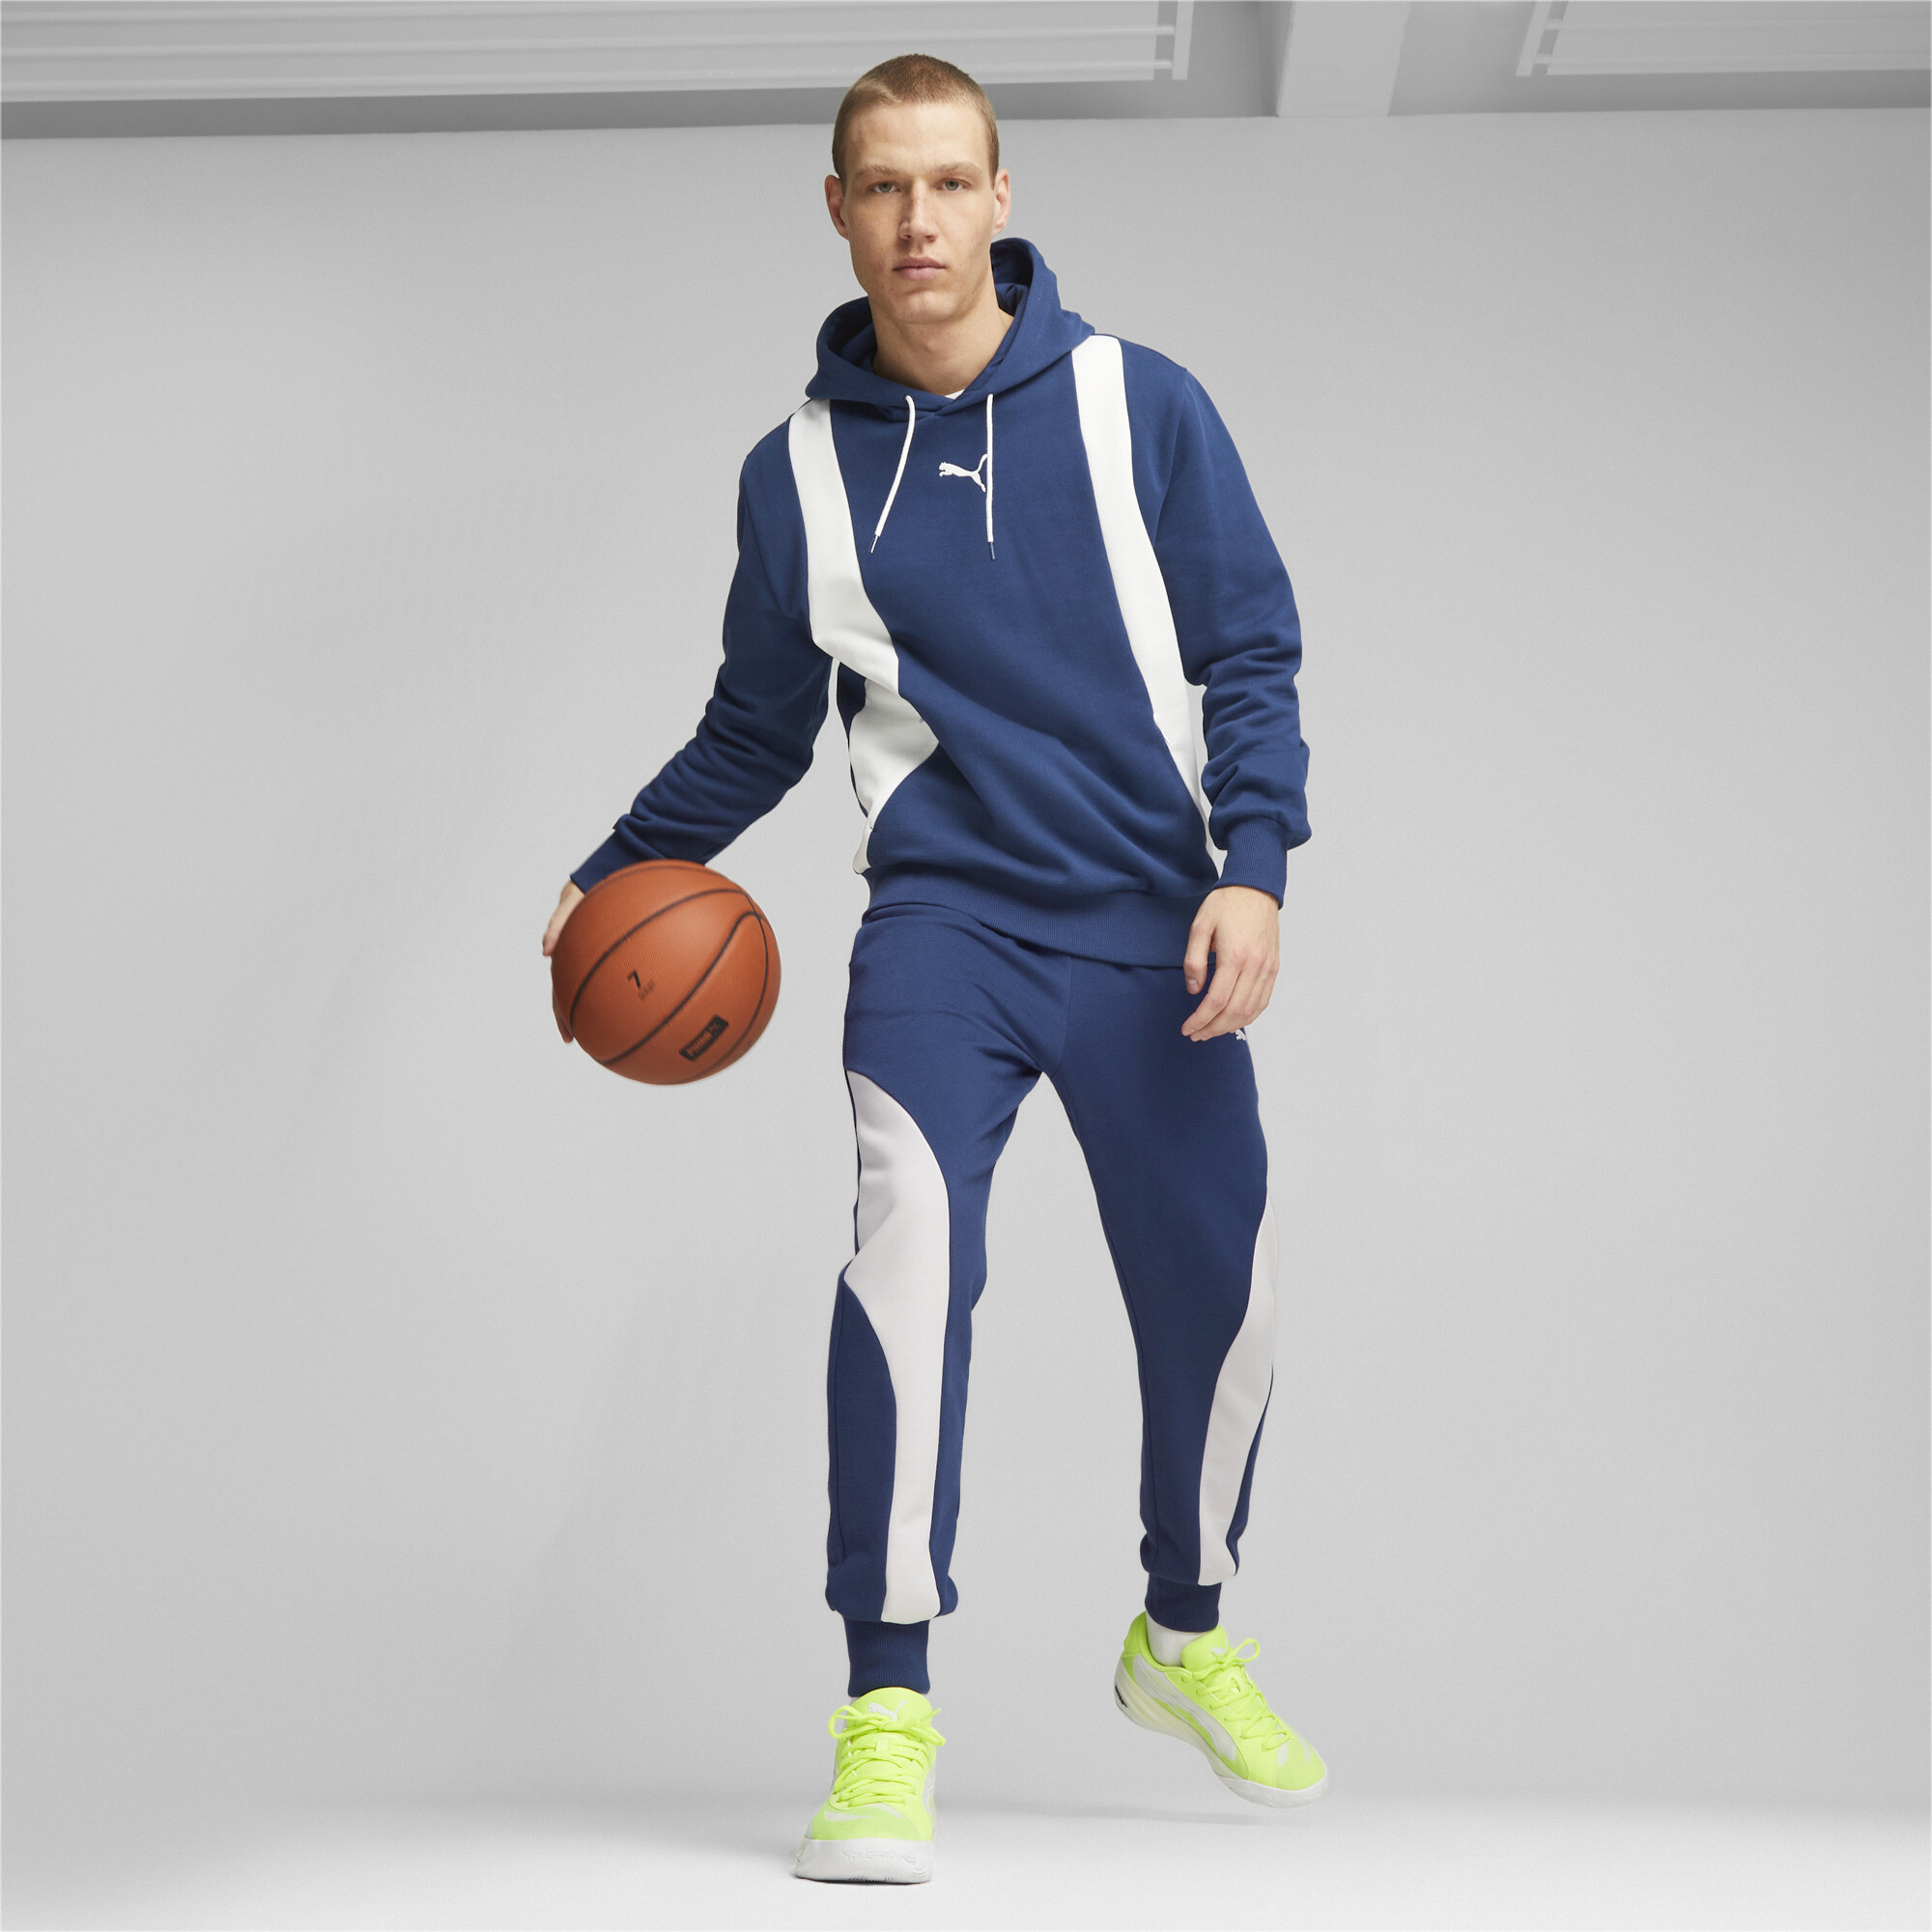 Men's PUMA Blueprint Formstrip Basketball Hoodie, Size Large